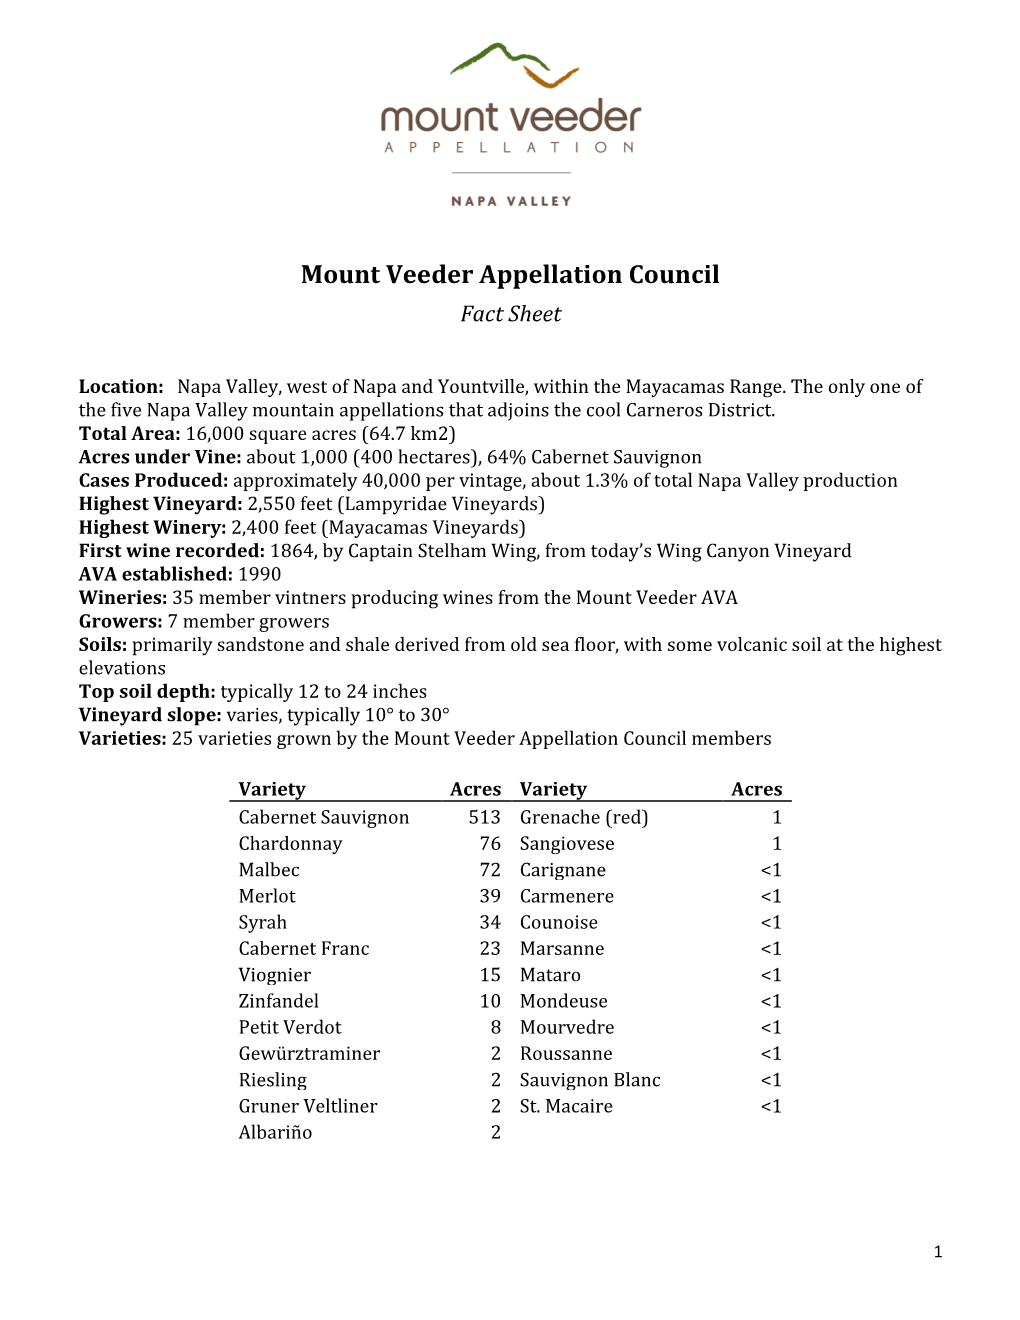 Mount Veeder Appellation Council Fact Sheet